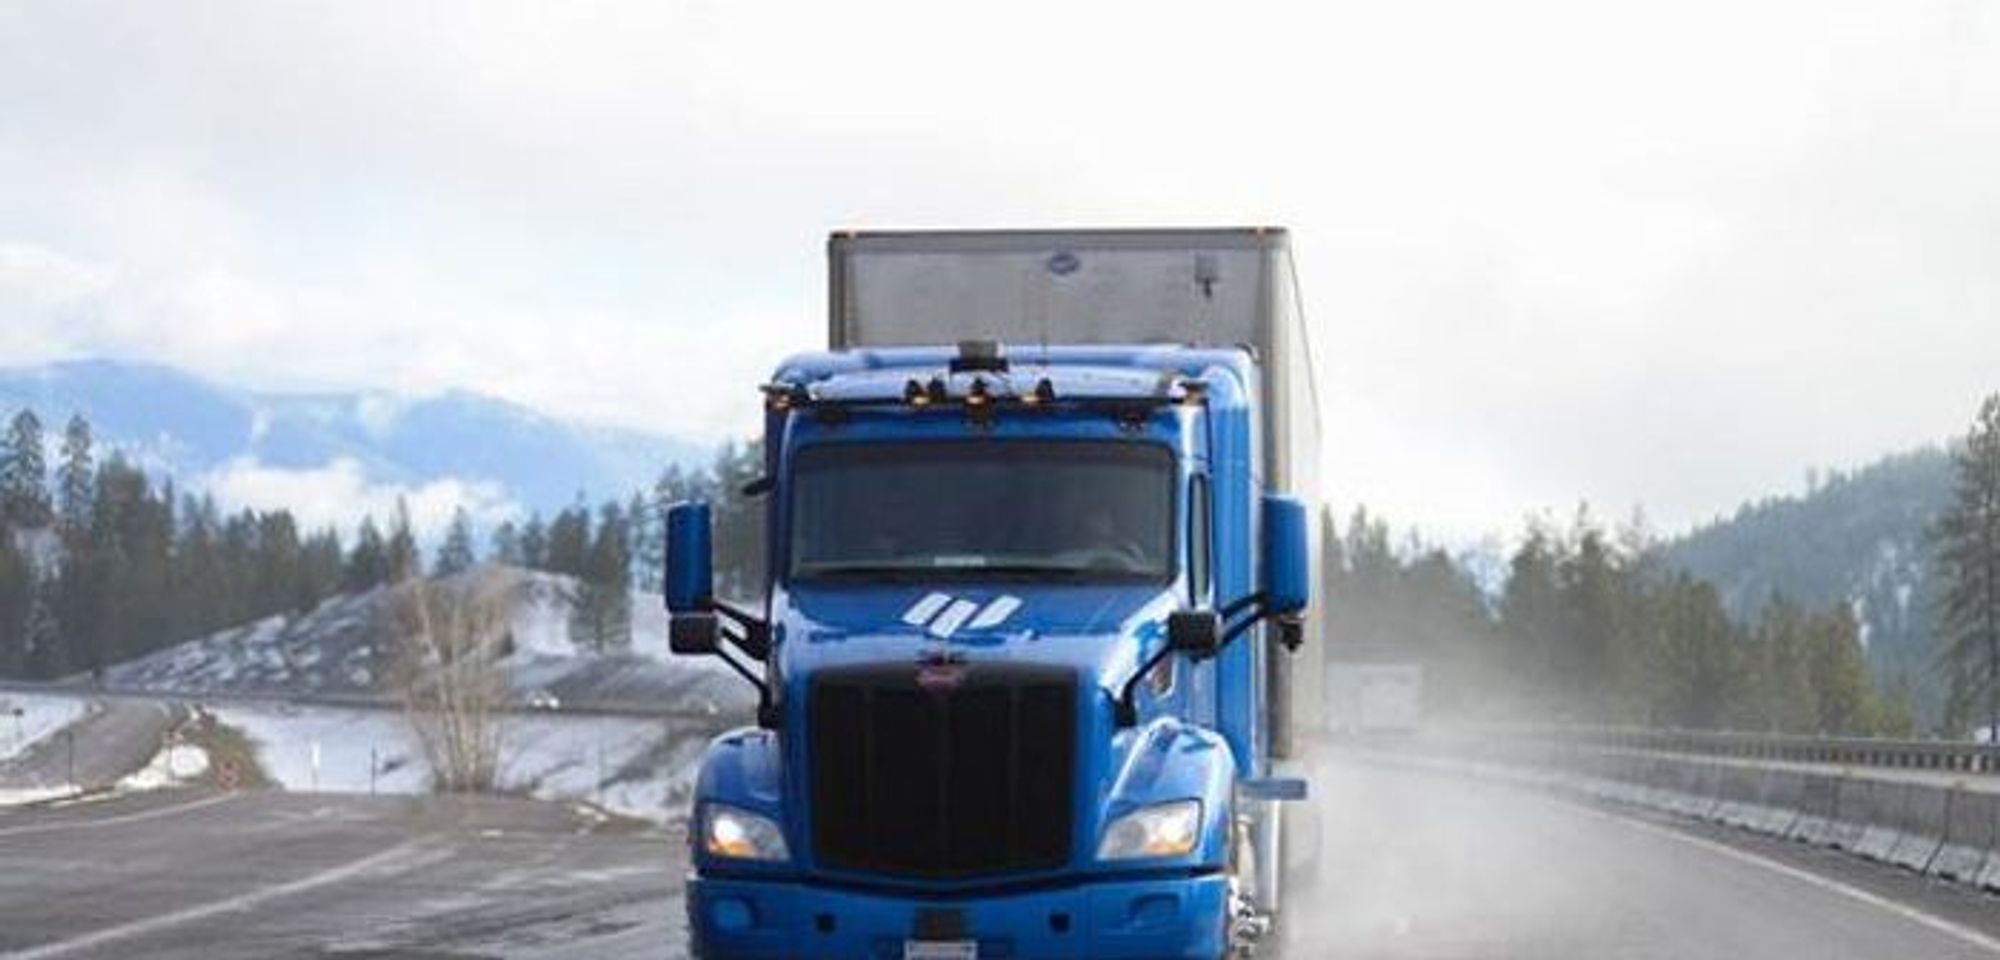 Autonomous trucking system from Embark Trucks passes winter testing   | Autonomous Vehicle International